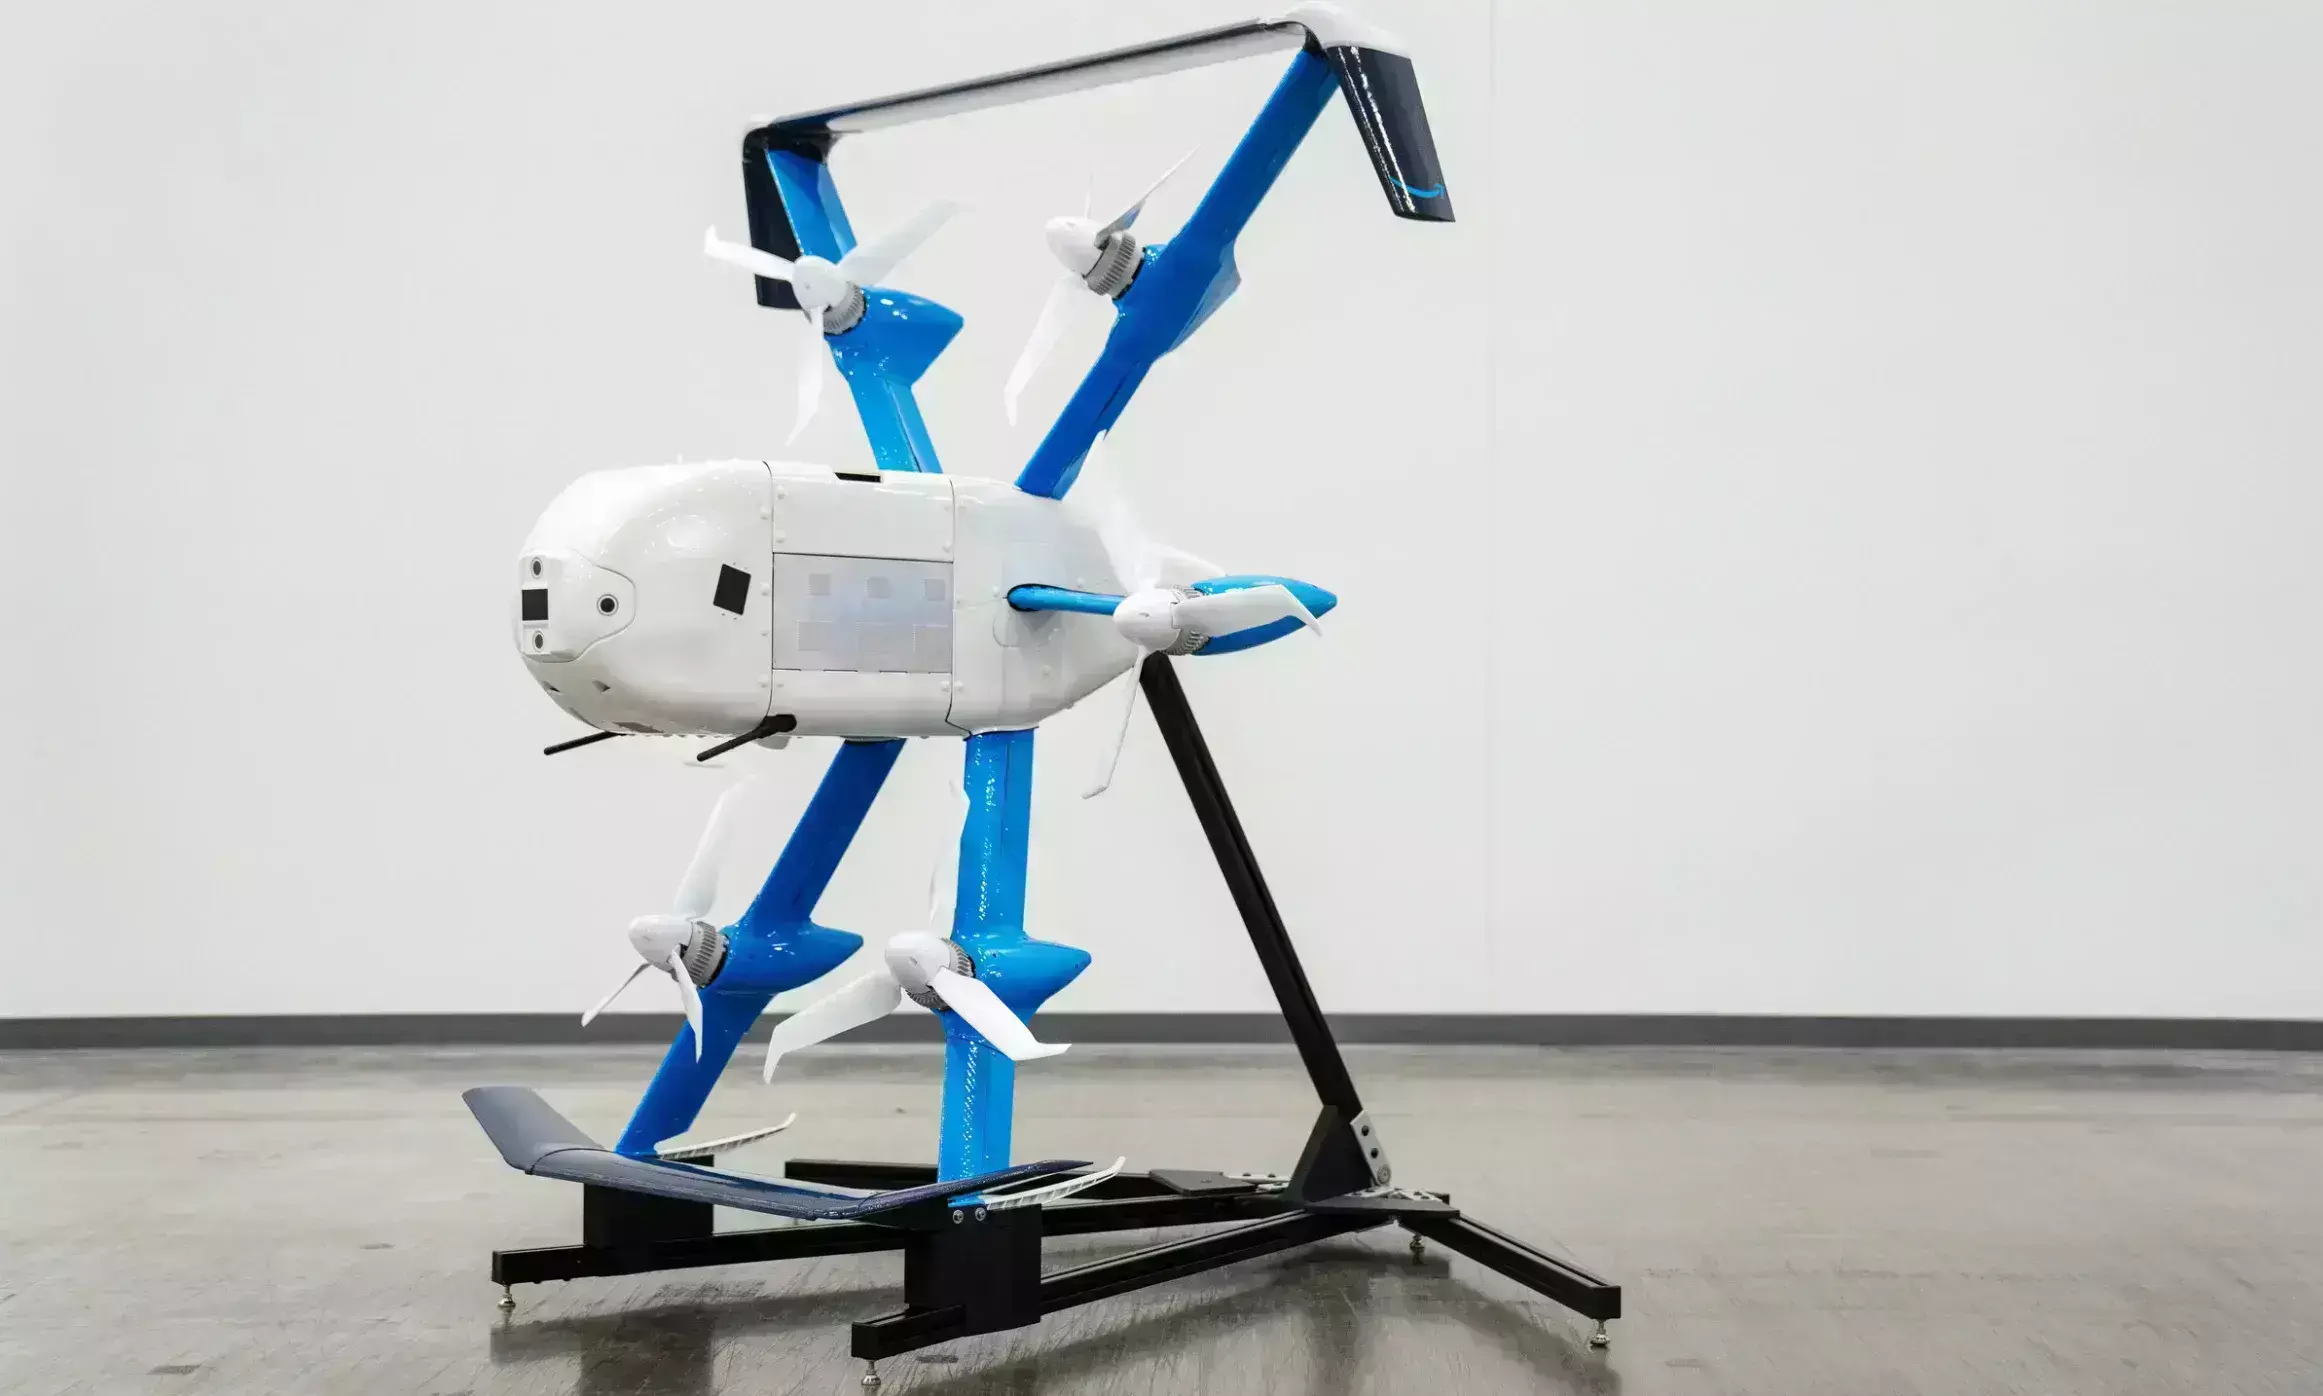 Amazon’s new MK30 drone